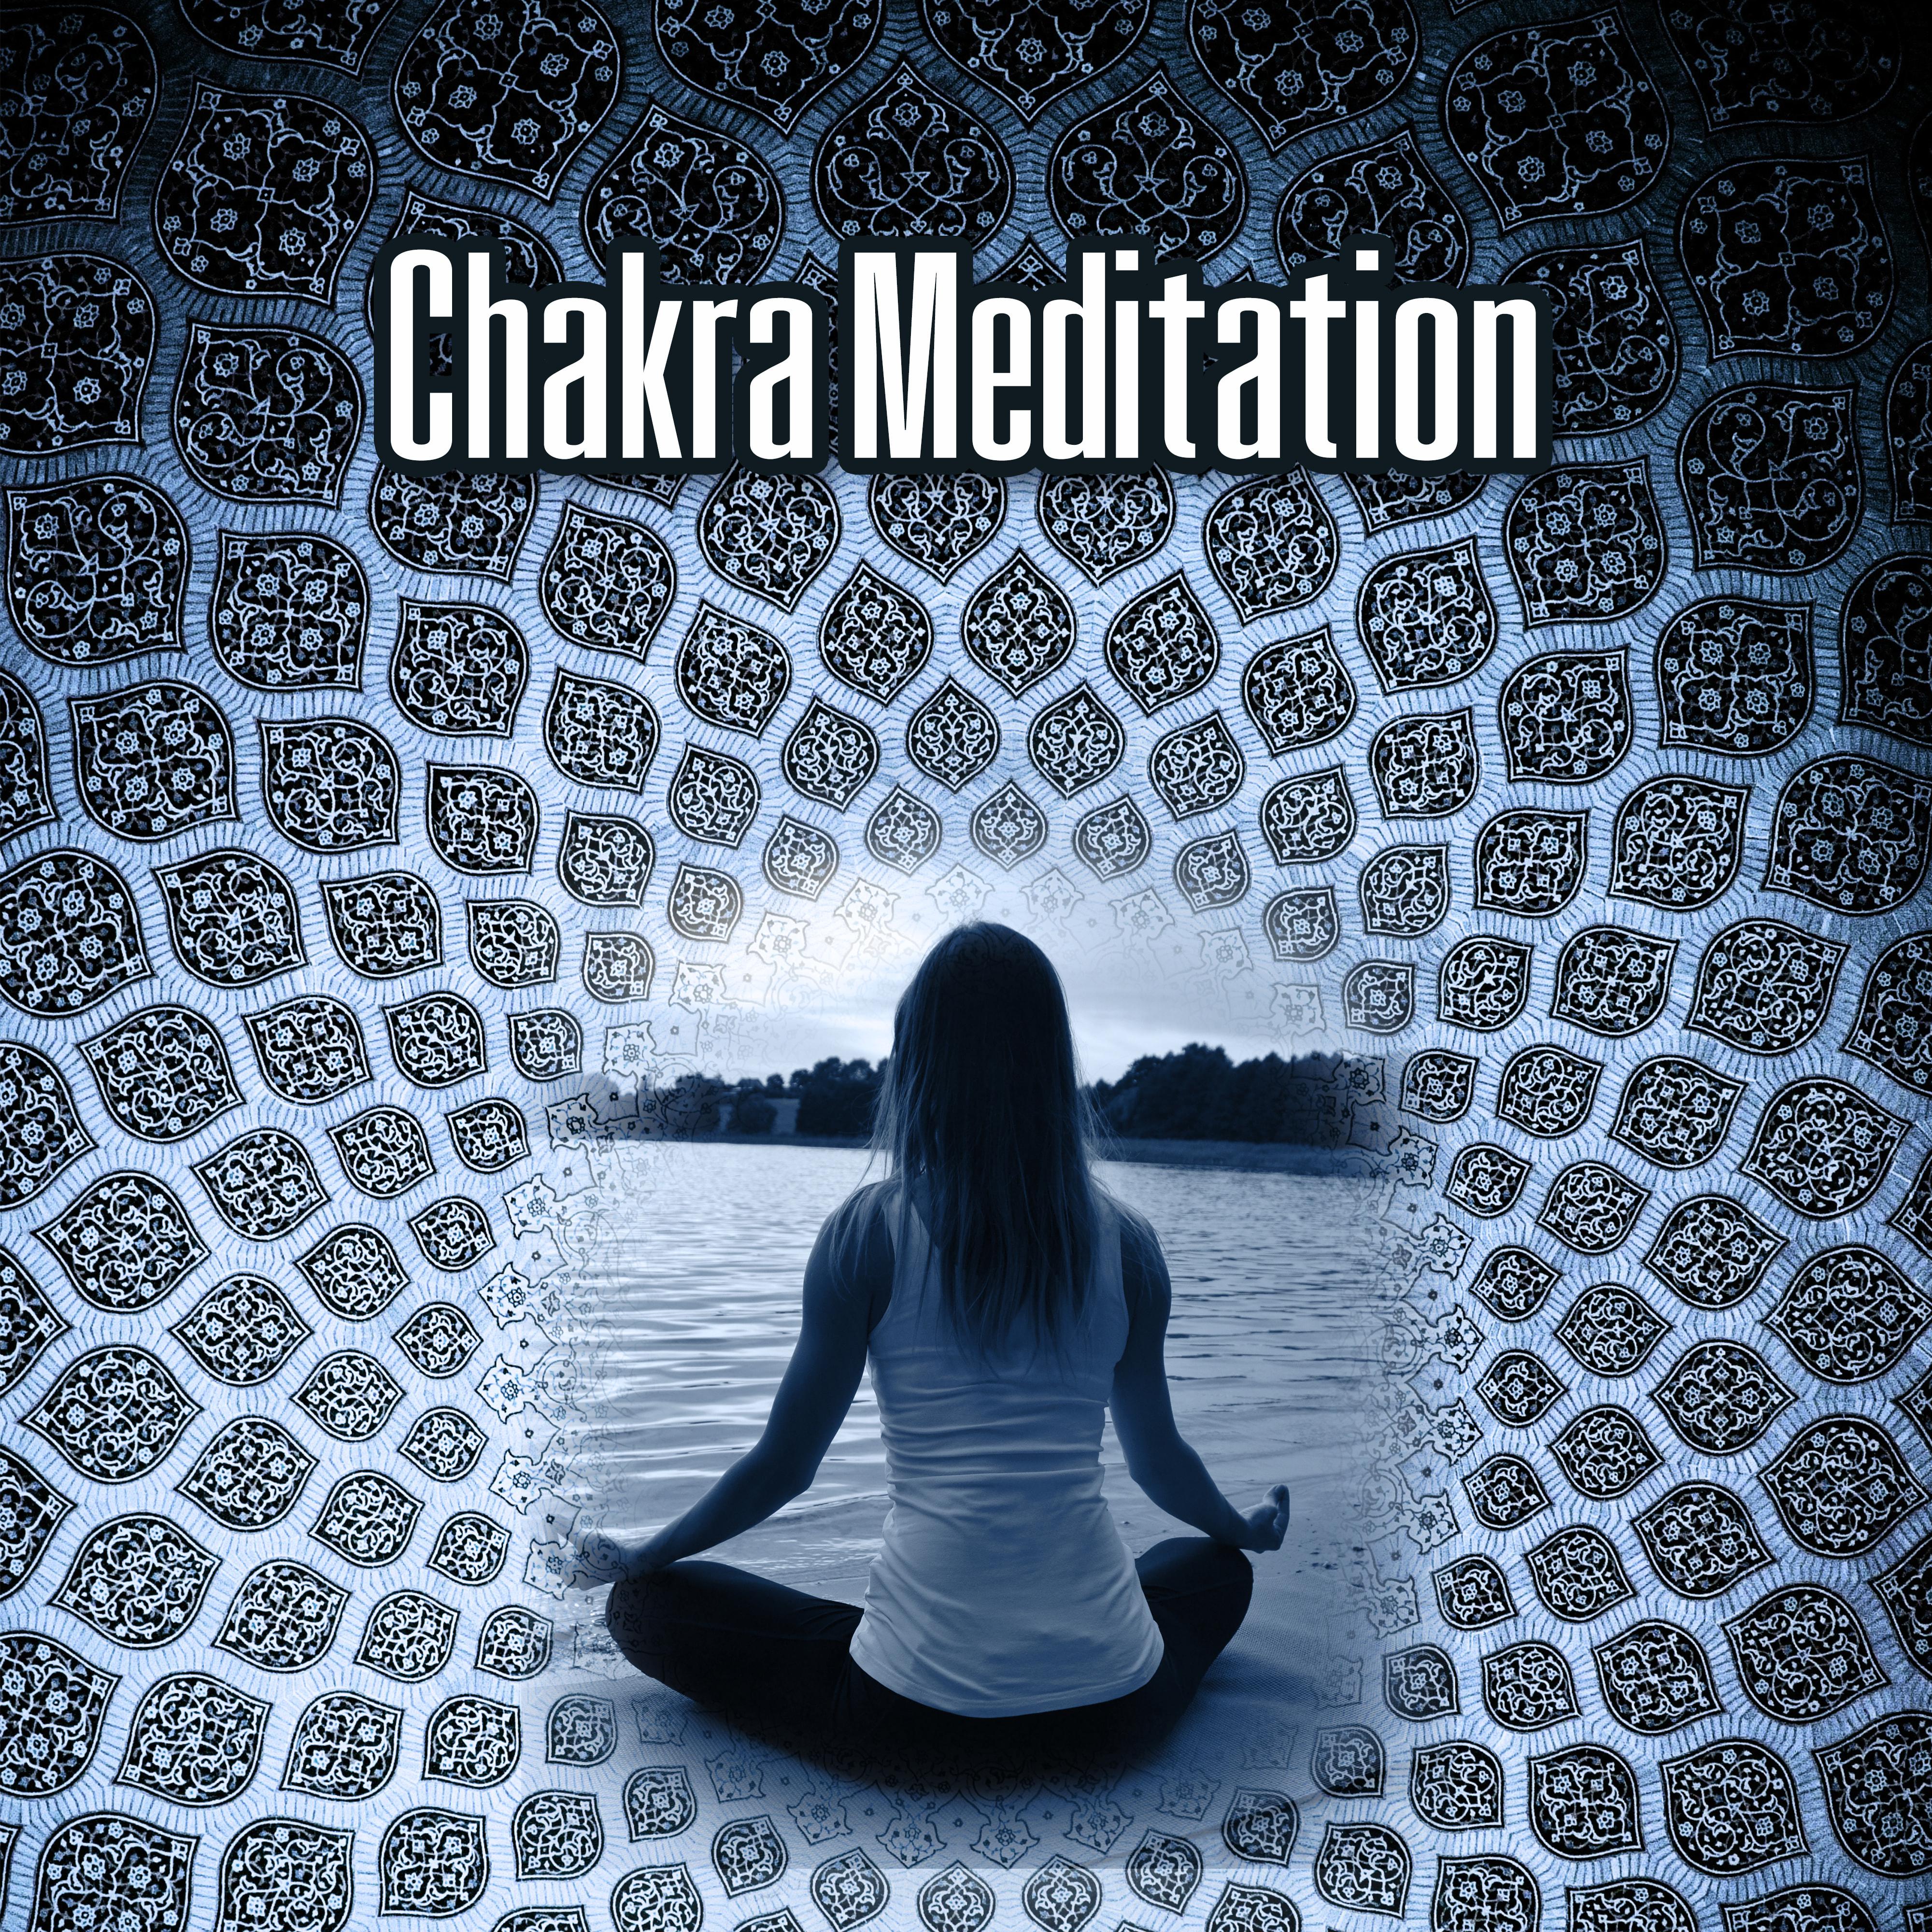 Chakra Meditation  Healing Energy  Calm Music, Contemplation, Hypnotic Music, Reiki, Zen, Peaceful Songs, Yoga Music